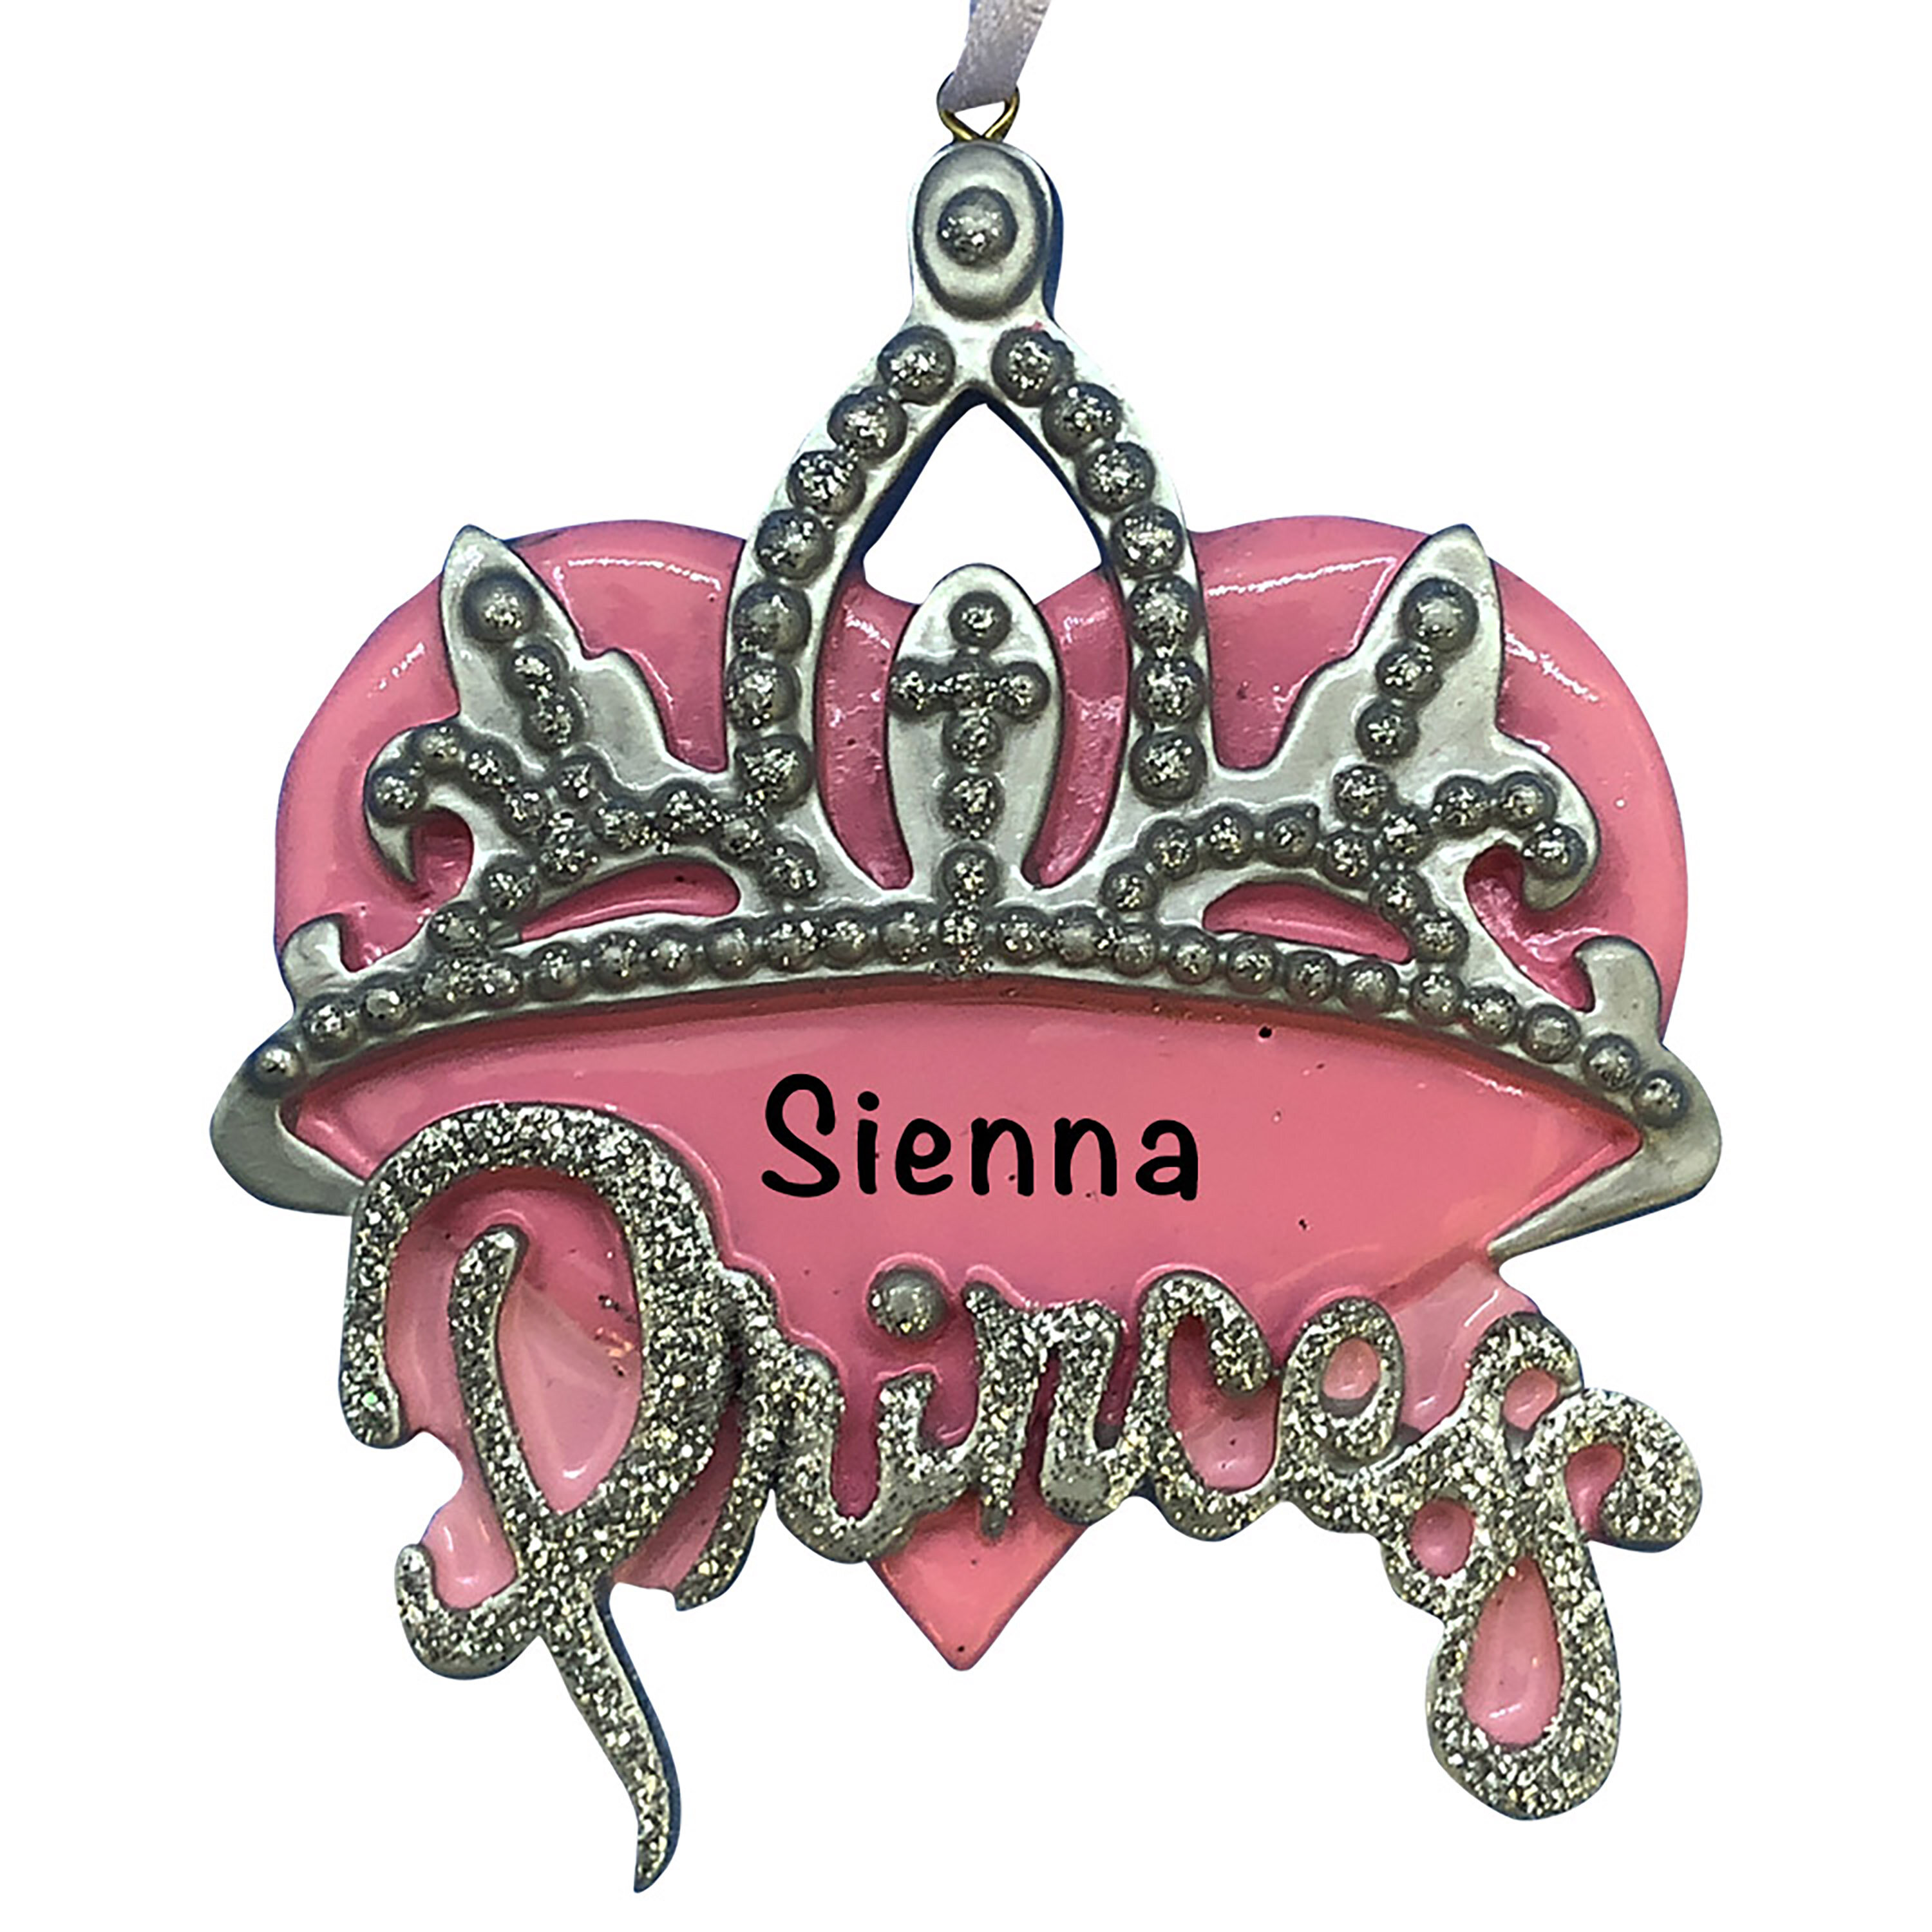 The Holiday Aisle Princess Heart And Crown Hanging Figurine Ornament Wayfair